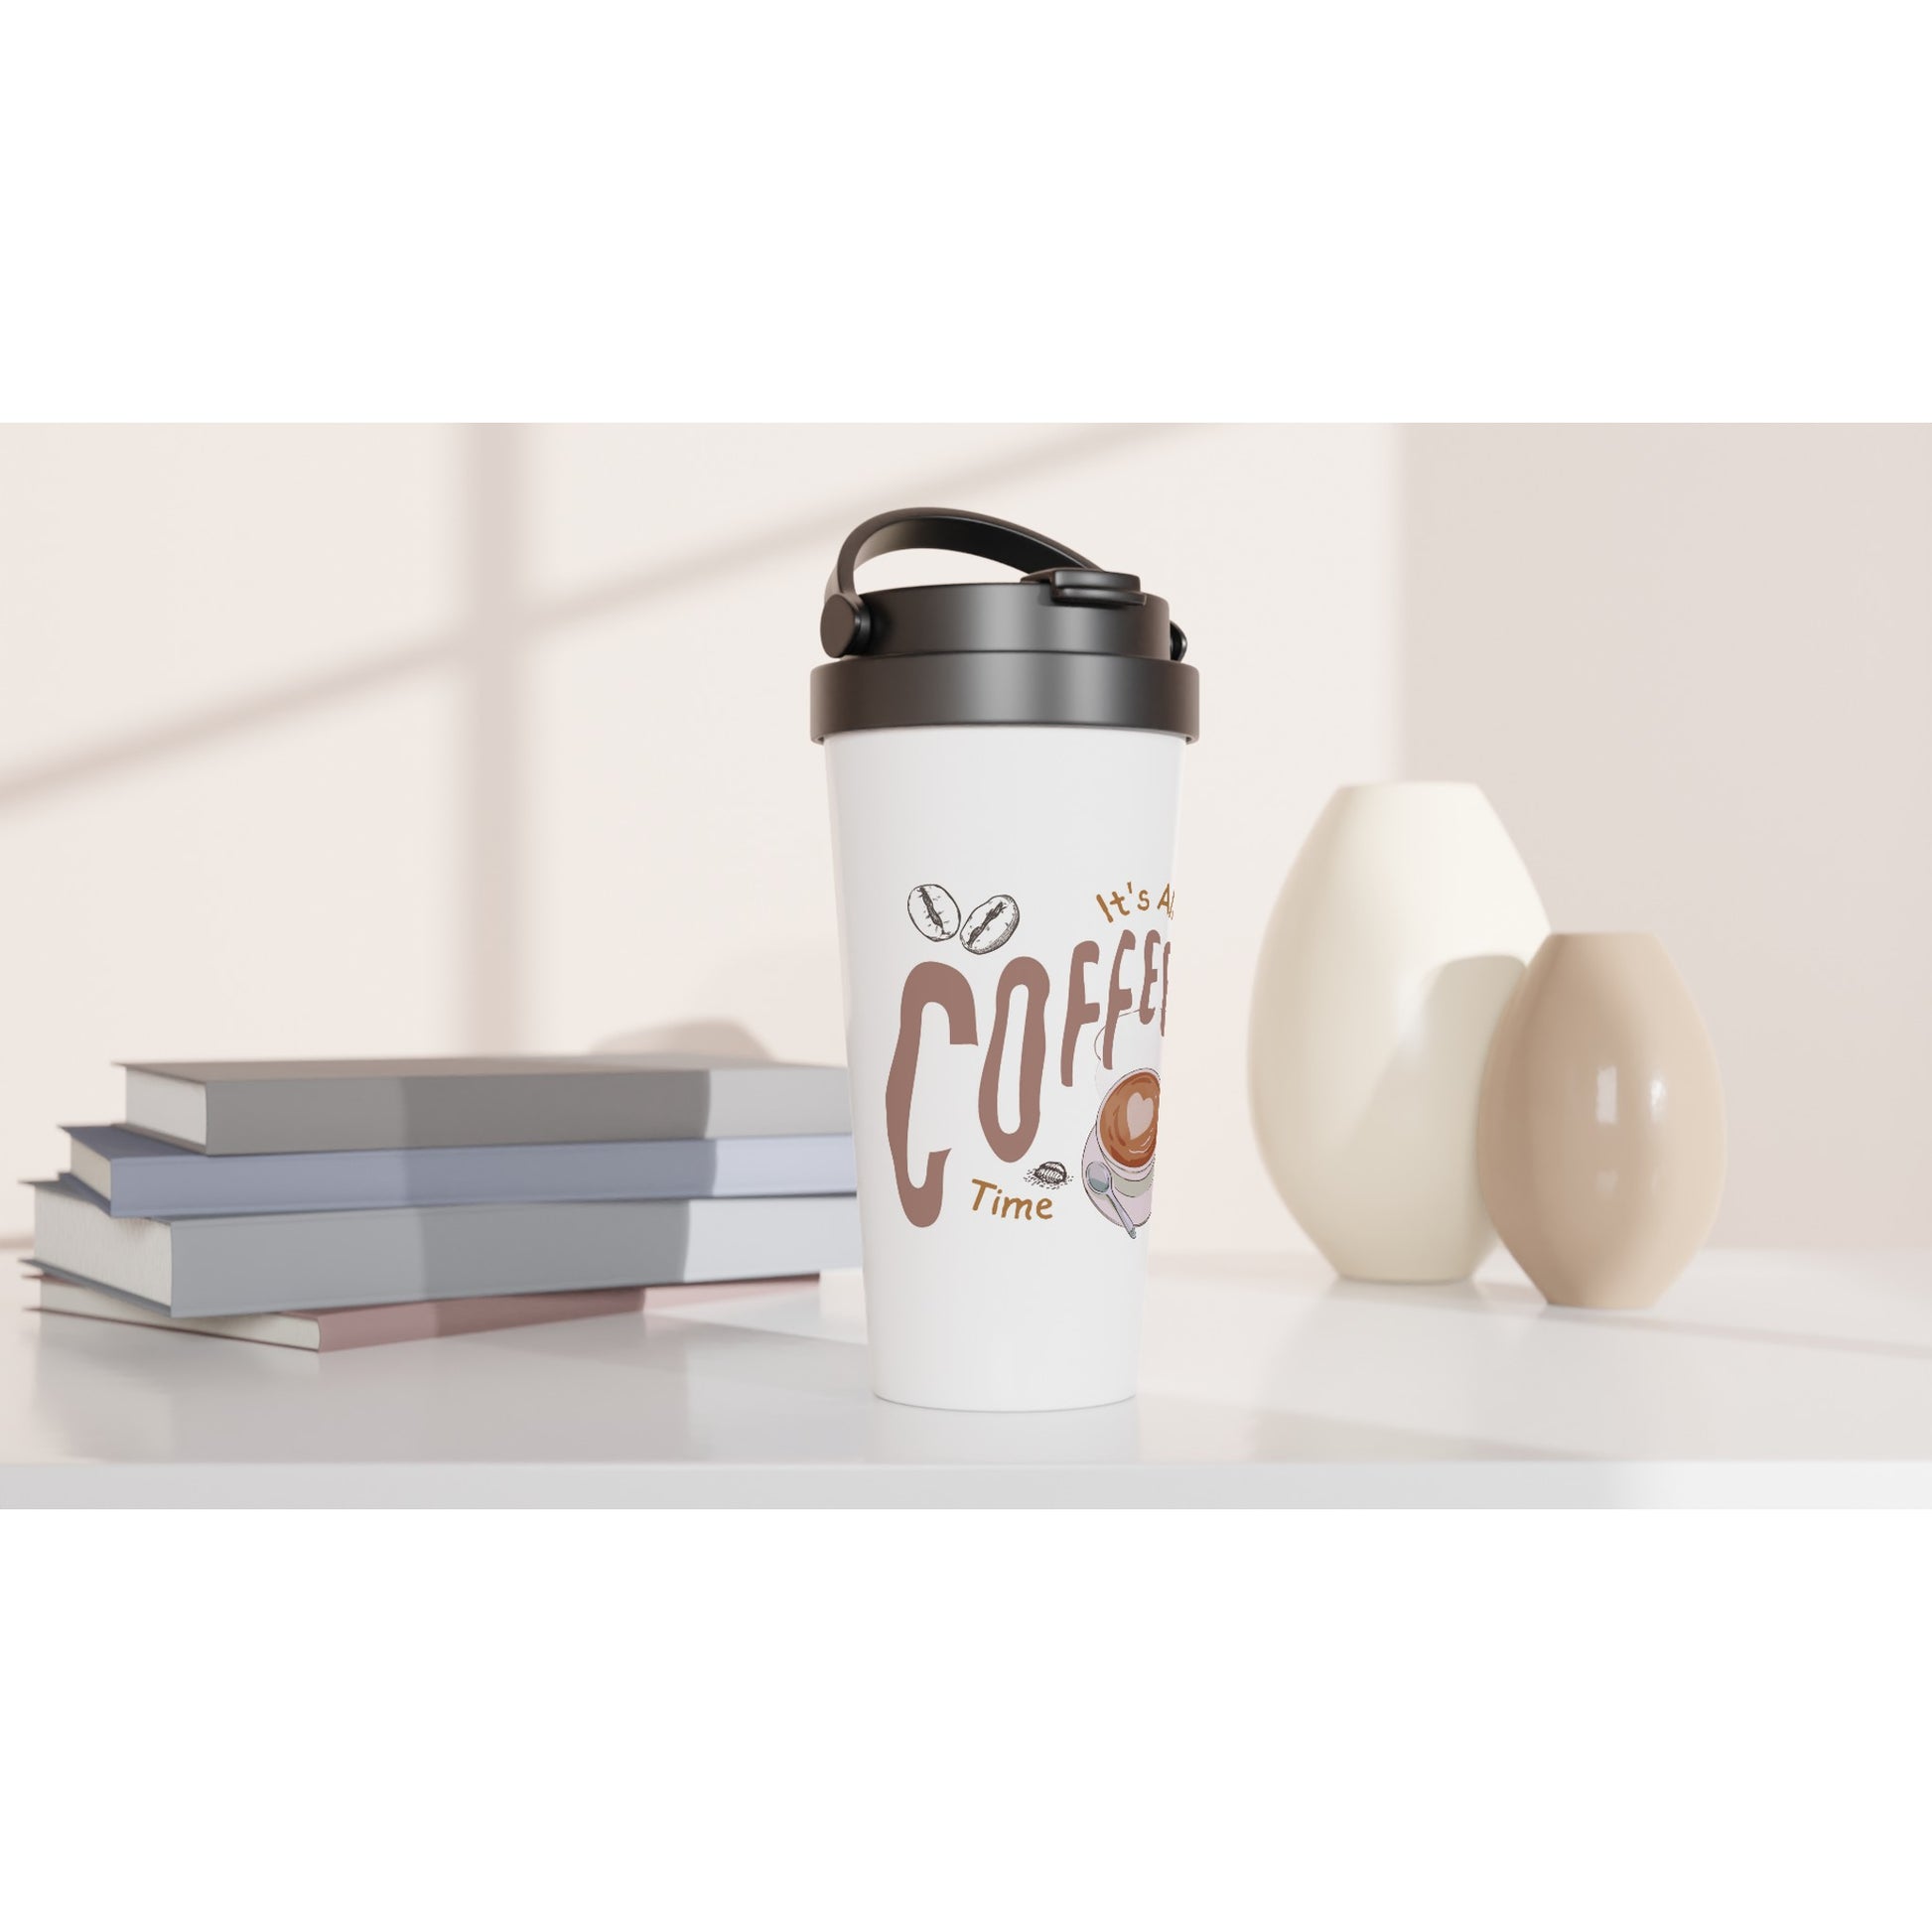 It's Always Coffee Time - White 15oz Stainless Steel Travel Mug Travel Mug Coffee